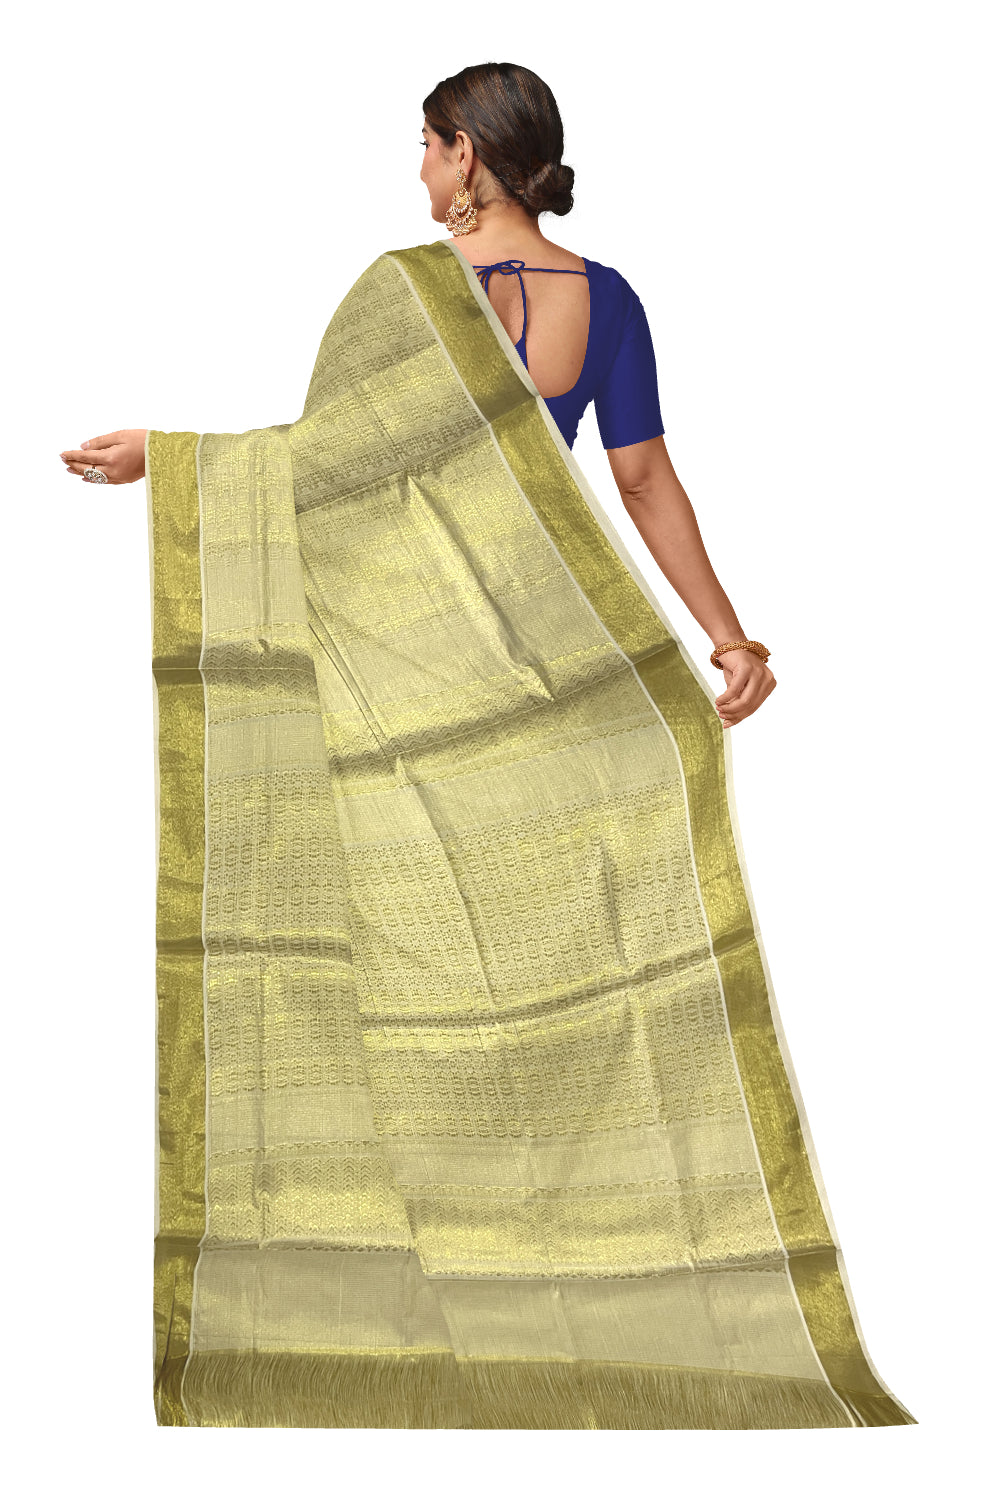 Tissue Heavy Woven Kerala Kasavu Saree